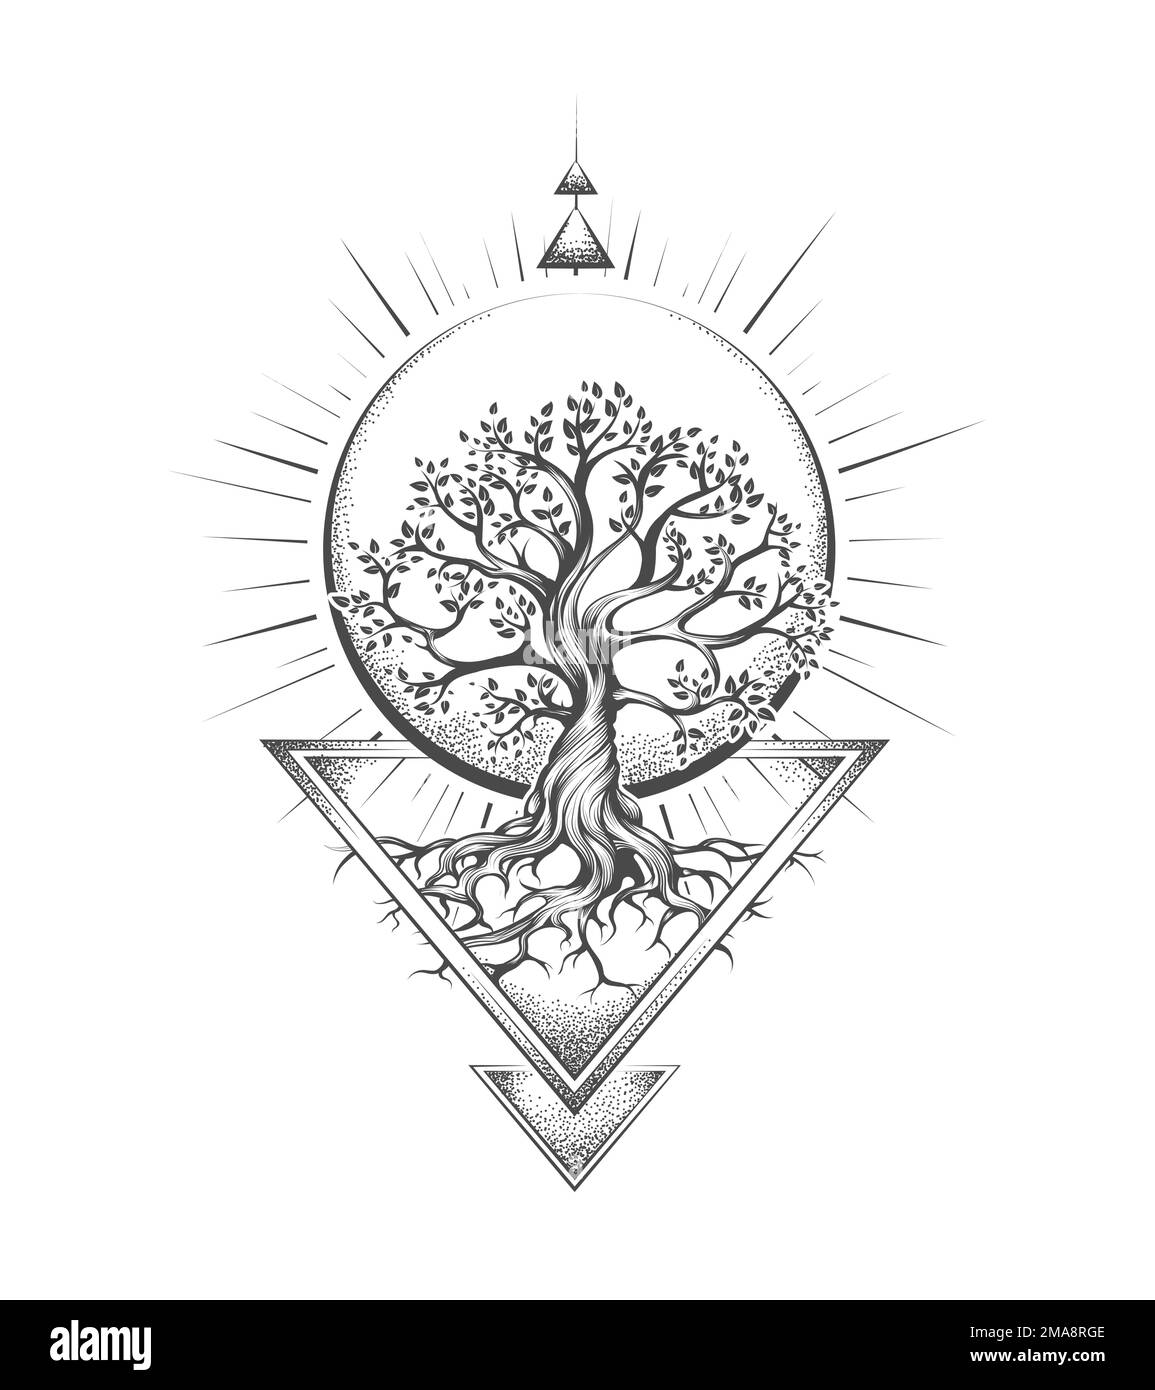 Traditional Tree Of Life Tattoo Idea  BlackInk